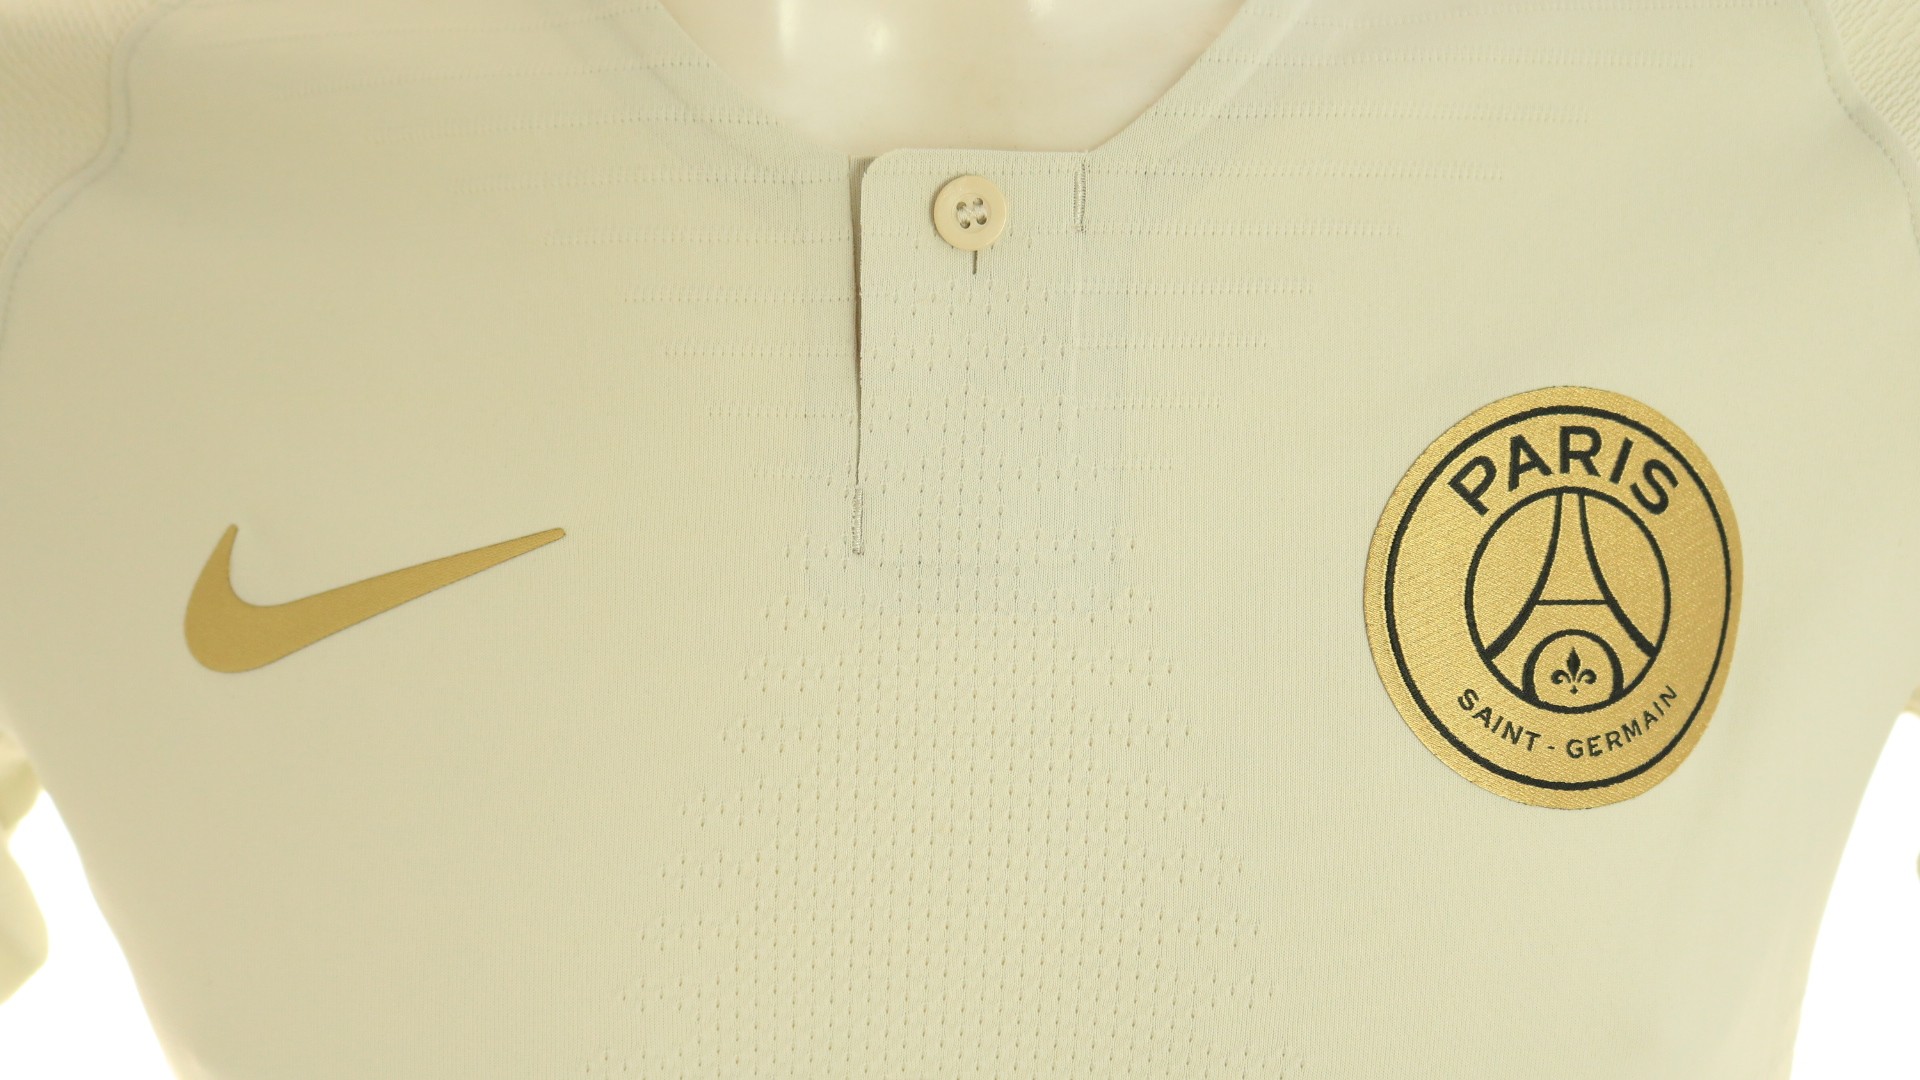 Replying to @Svasta PSG x Louis Vuitton ⚜️ Rare Football Shirts